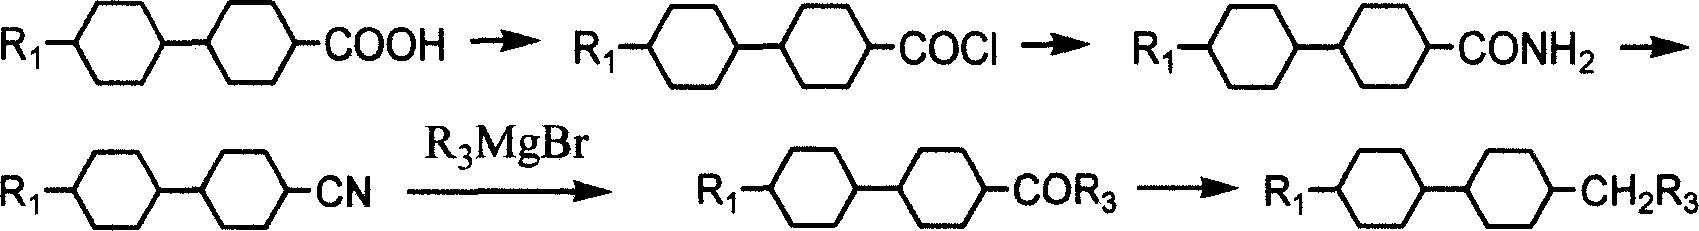 Method for preparing bis cyclohexane monomer liquid crystal using grignard reaction